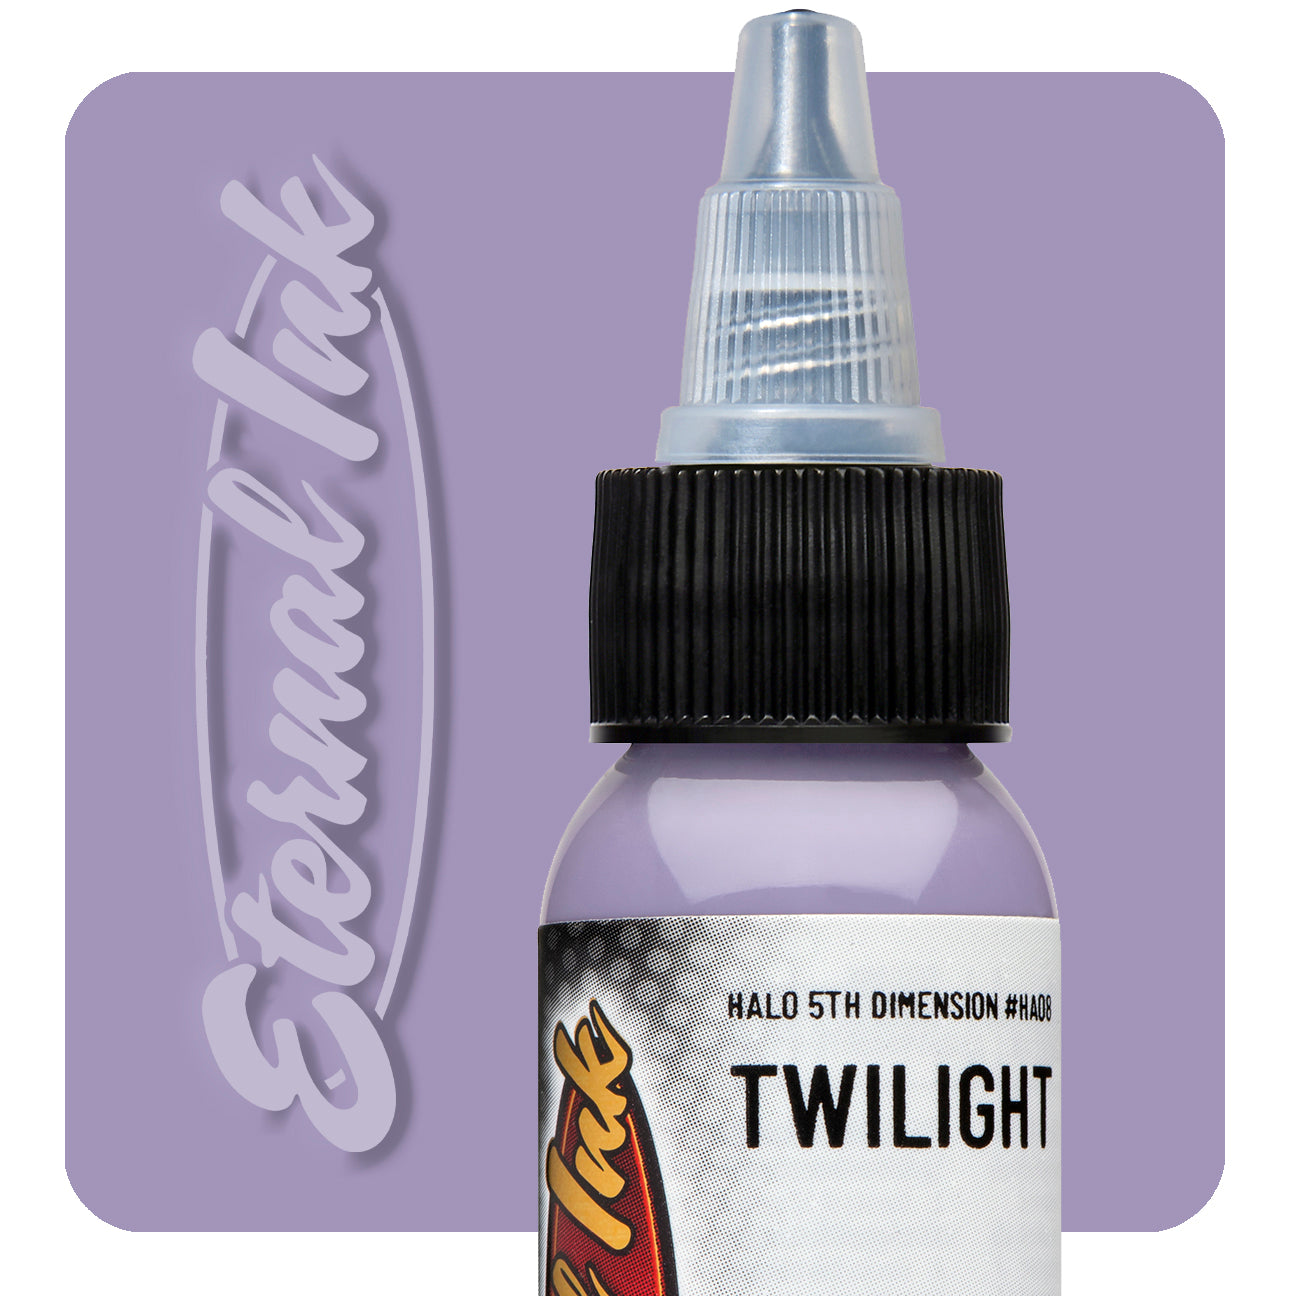 Twilight - Fusion — ScentSationals